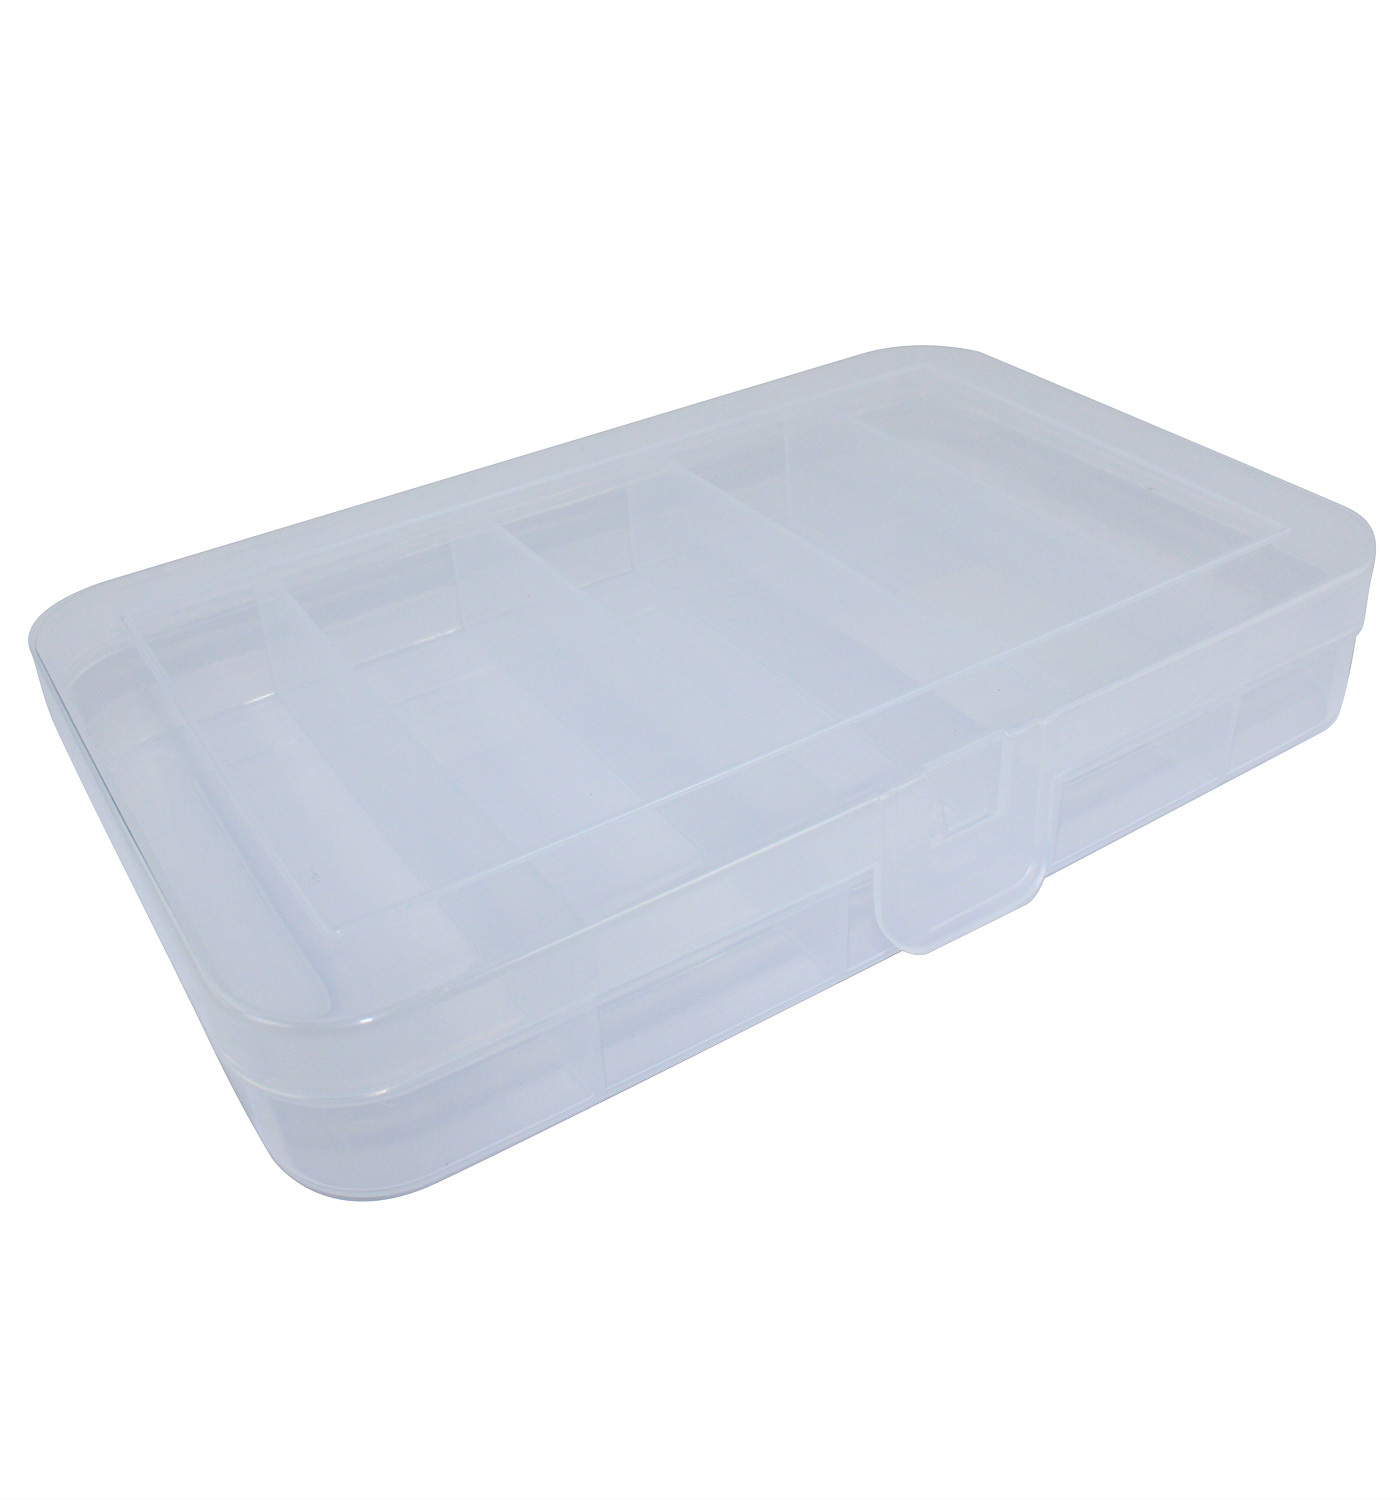 Plastic Storage Box With 5 Compartments 19cm x 12cm x 3cm